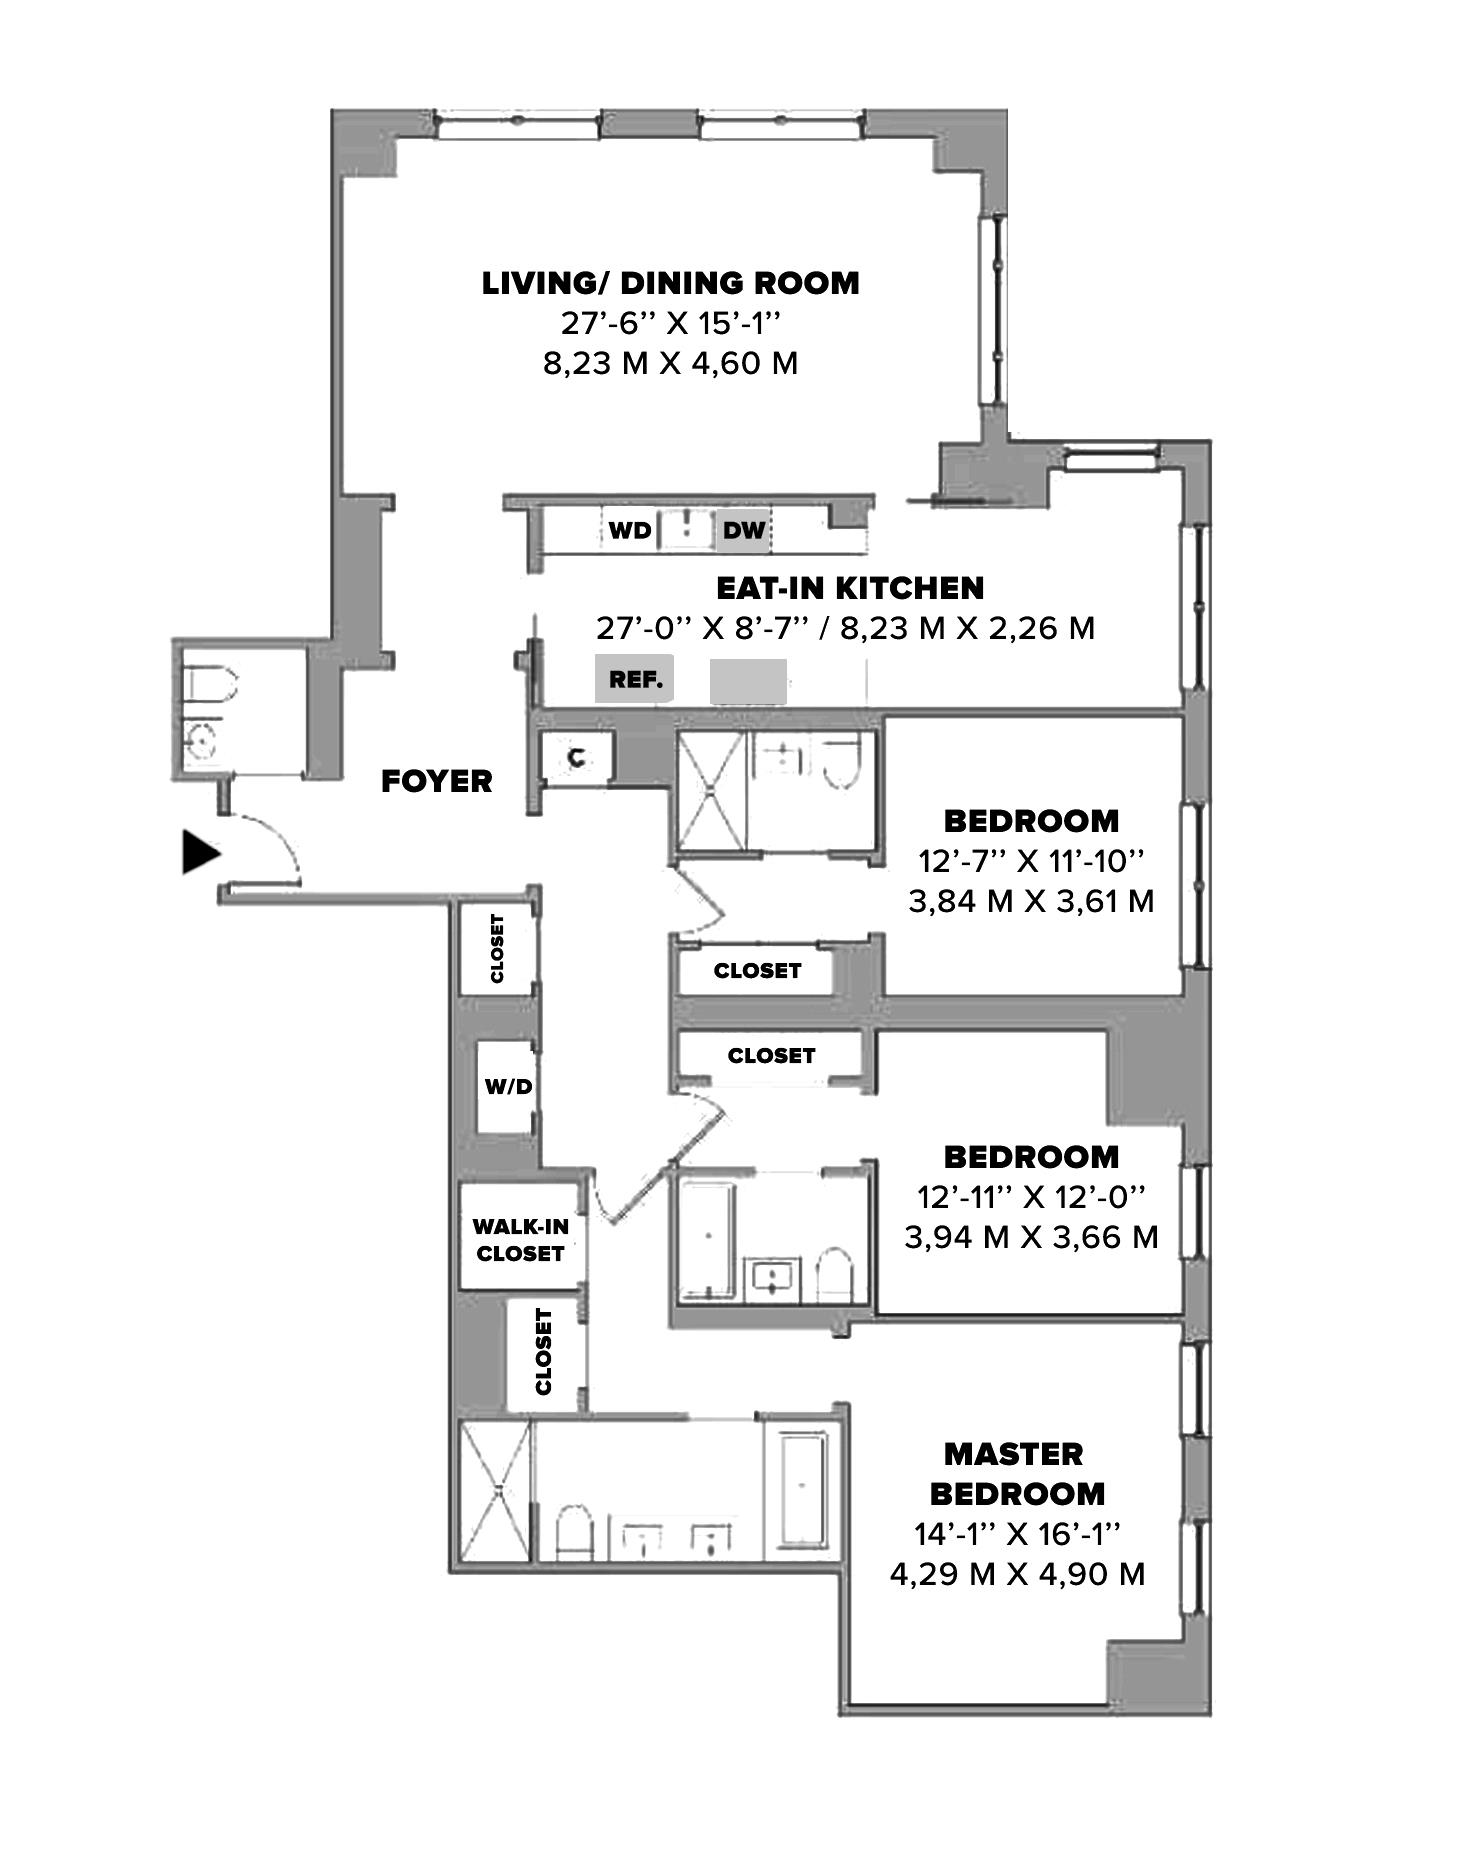 Floorplan for 30 Park Place, 53-B